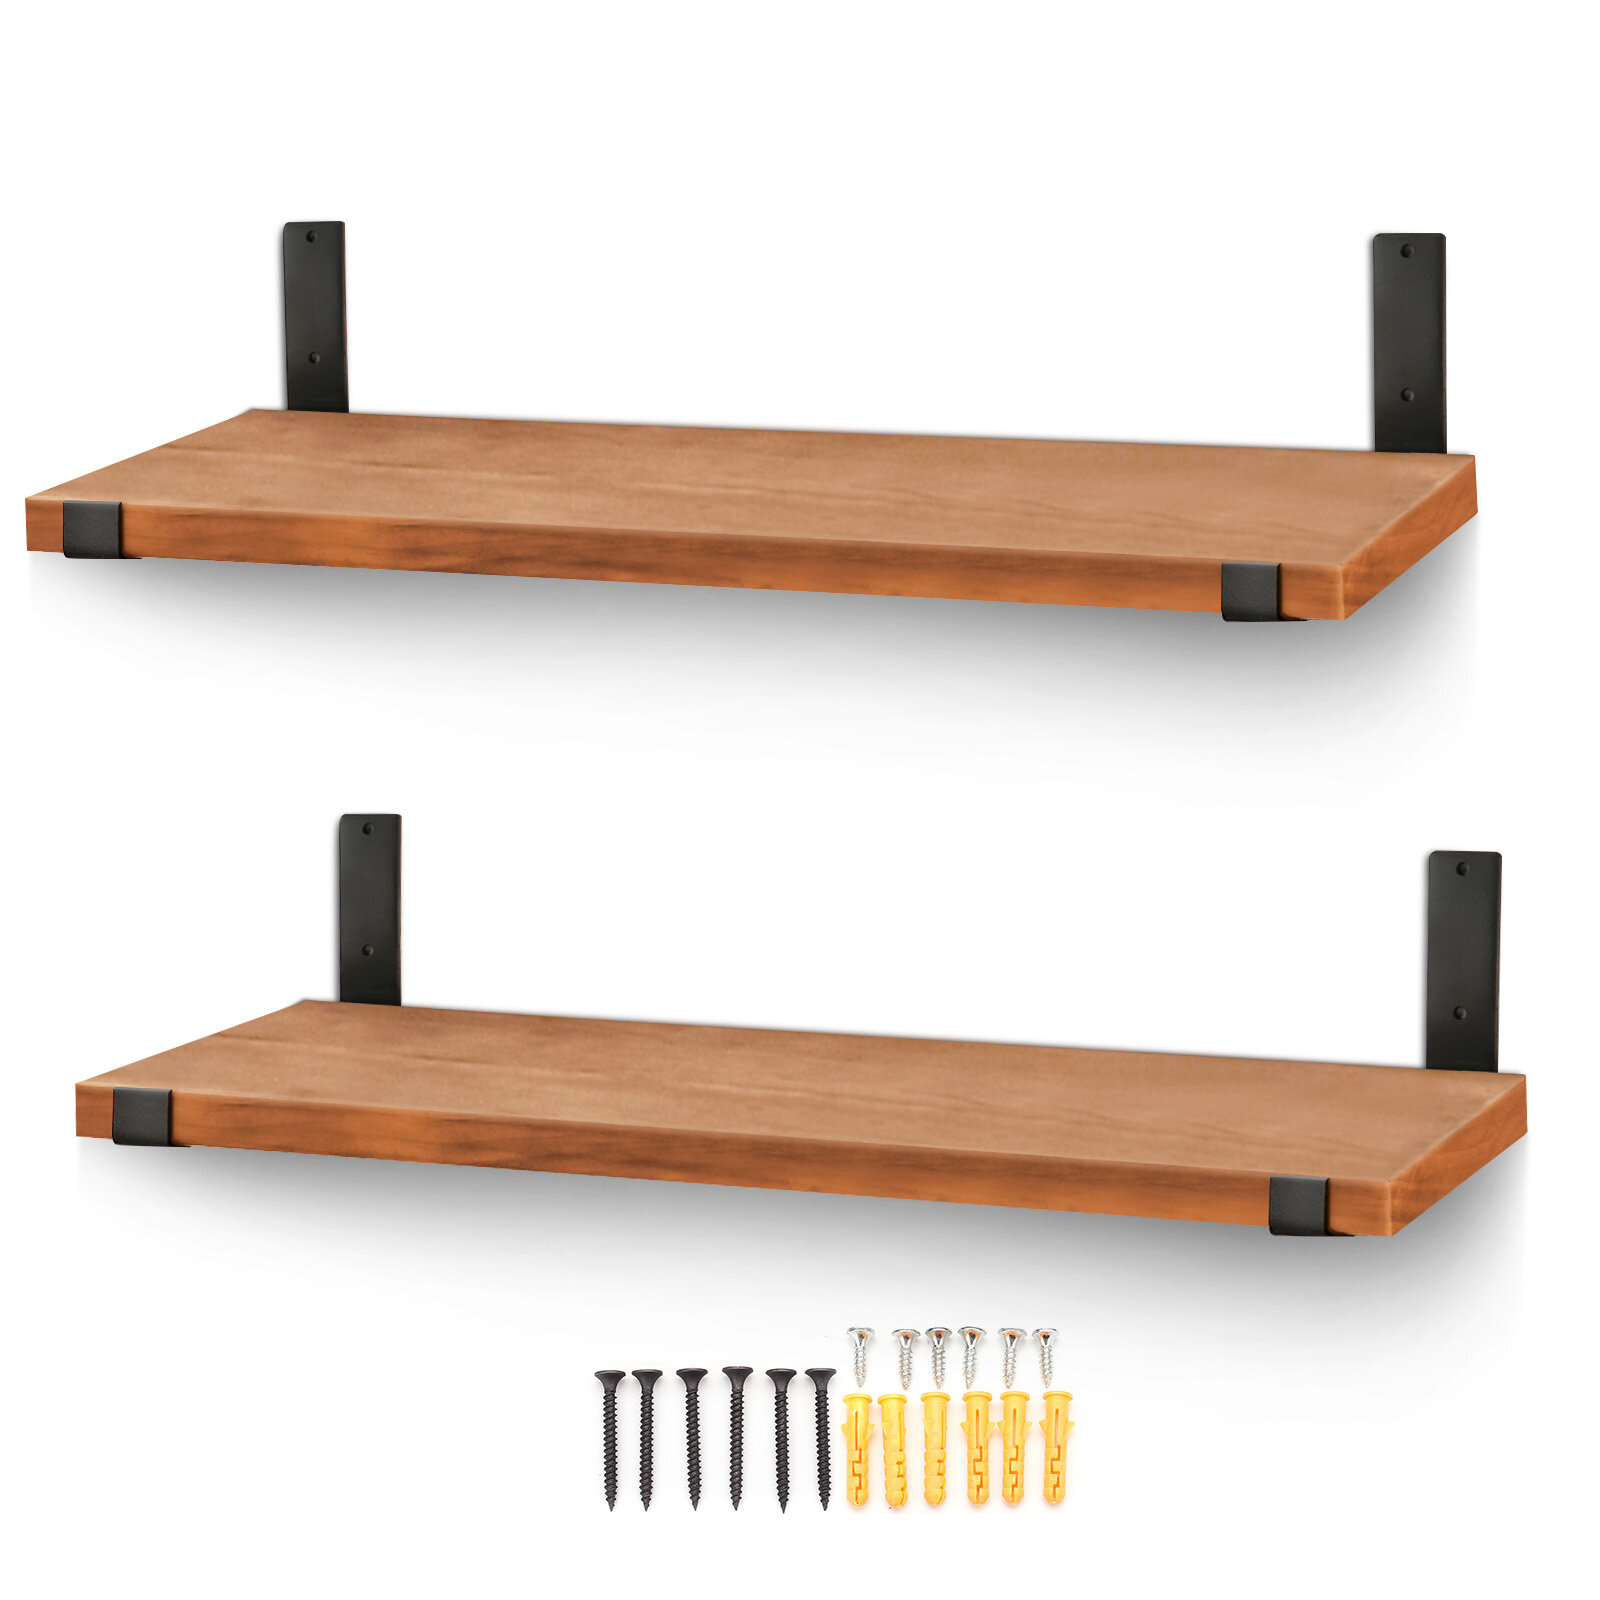 4PCS/ Set Wall Mounted Floating Shelves Holder DIY Storage Shelving Display Bracket